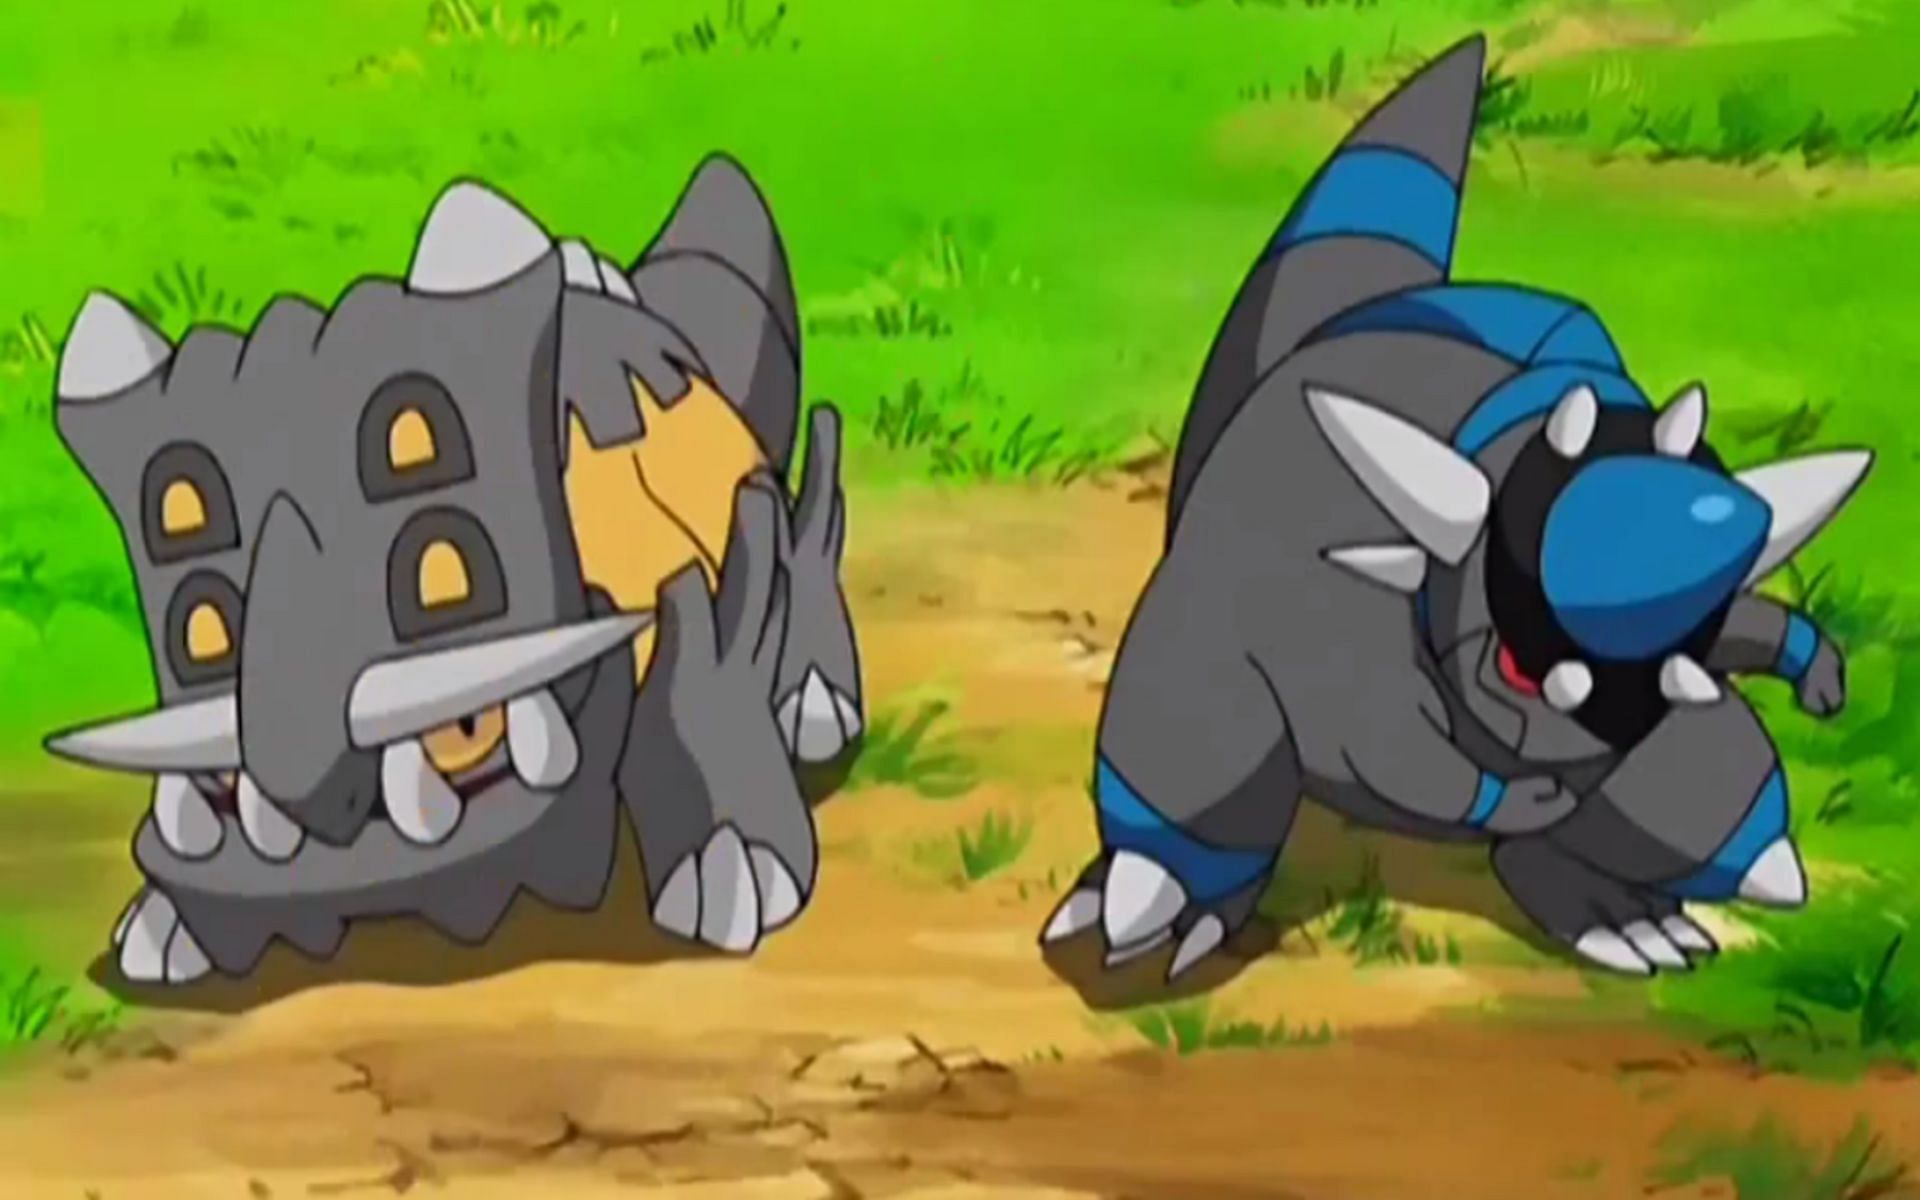 Rampardos (right) is a top performing Rock-type Raid attacker (Image via The Pokemon Company)